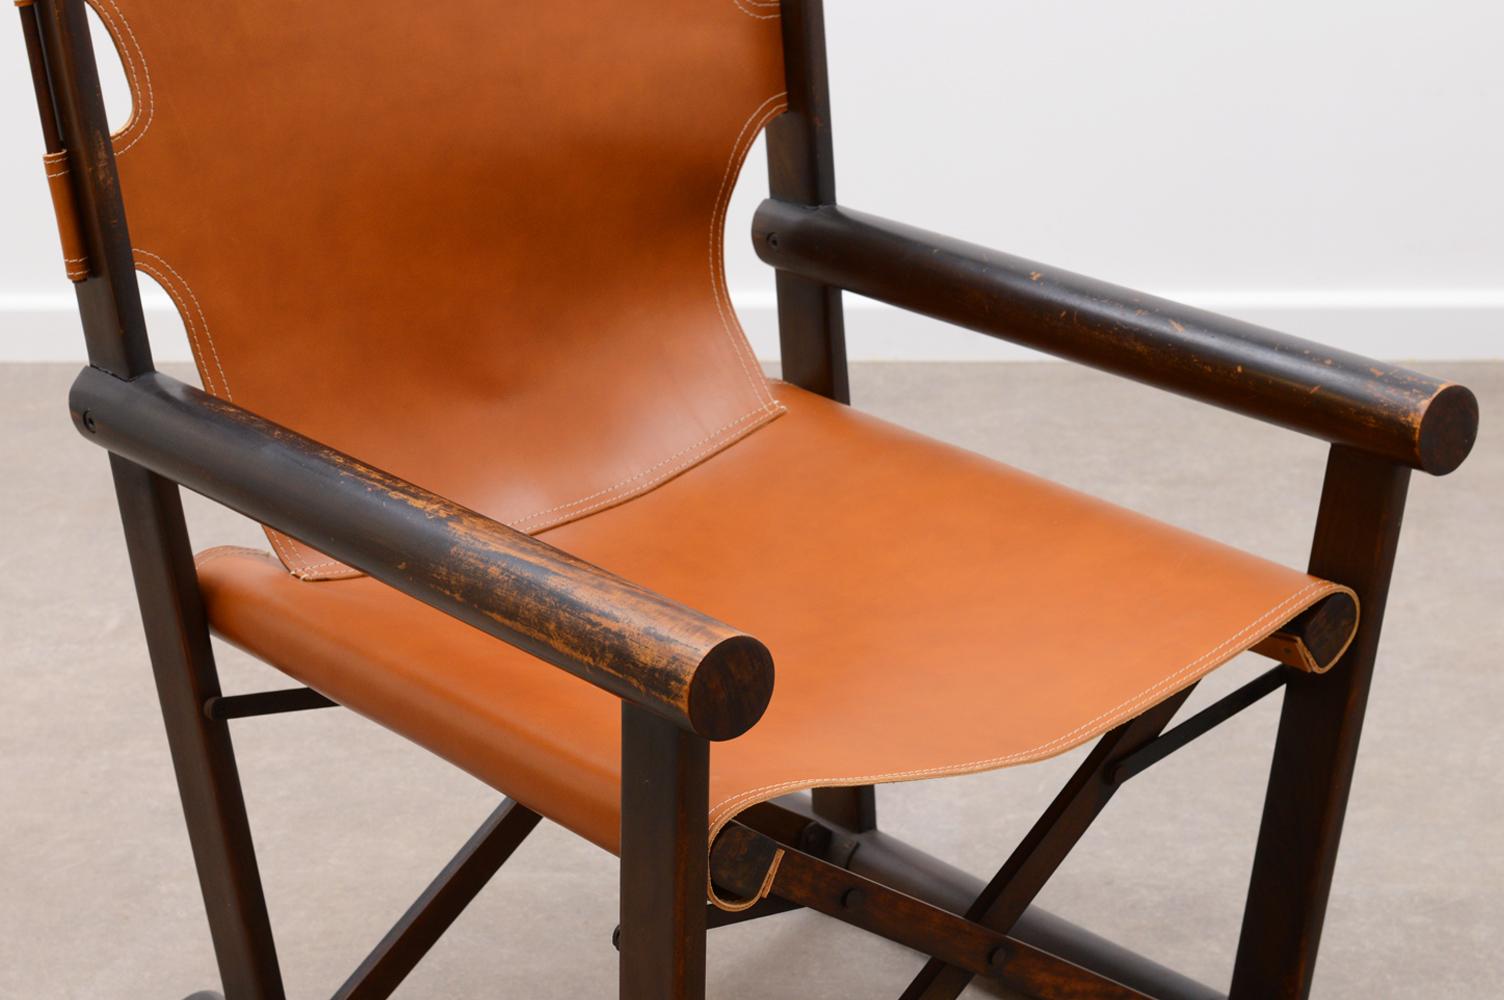 Mid-20th Century PL22 chair by Carlo Hauner & Martin Eisler for OCA, Brazil 60s.